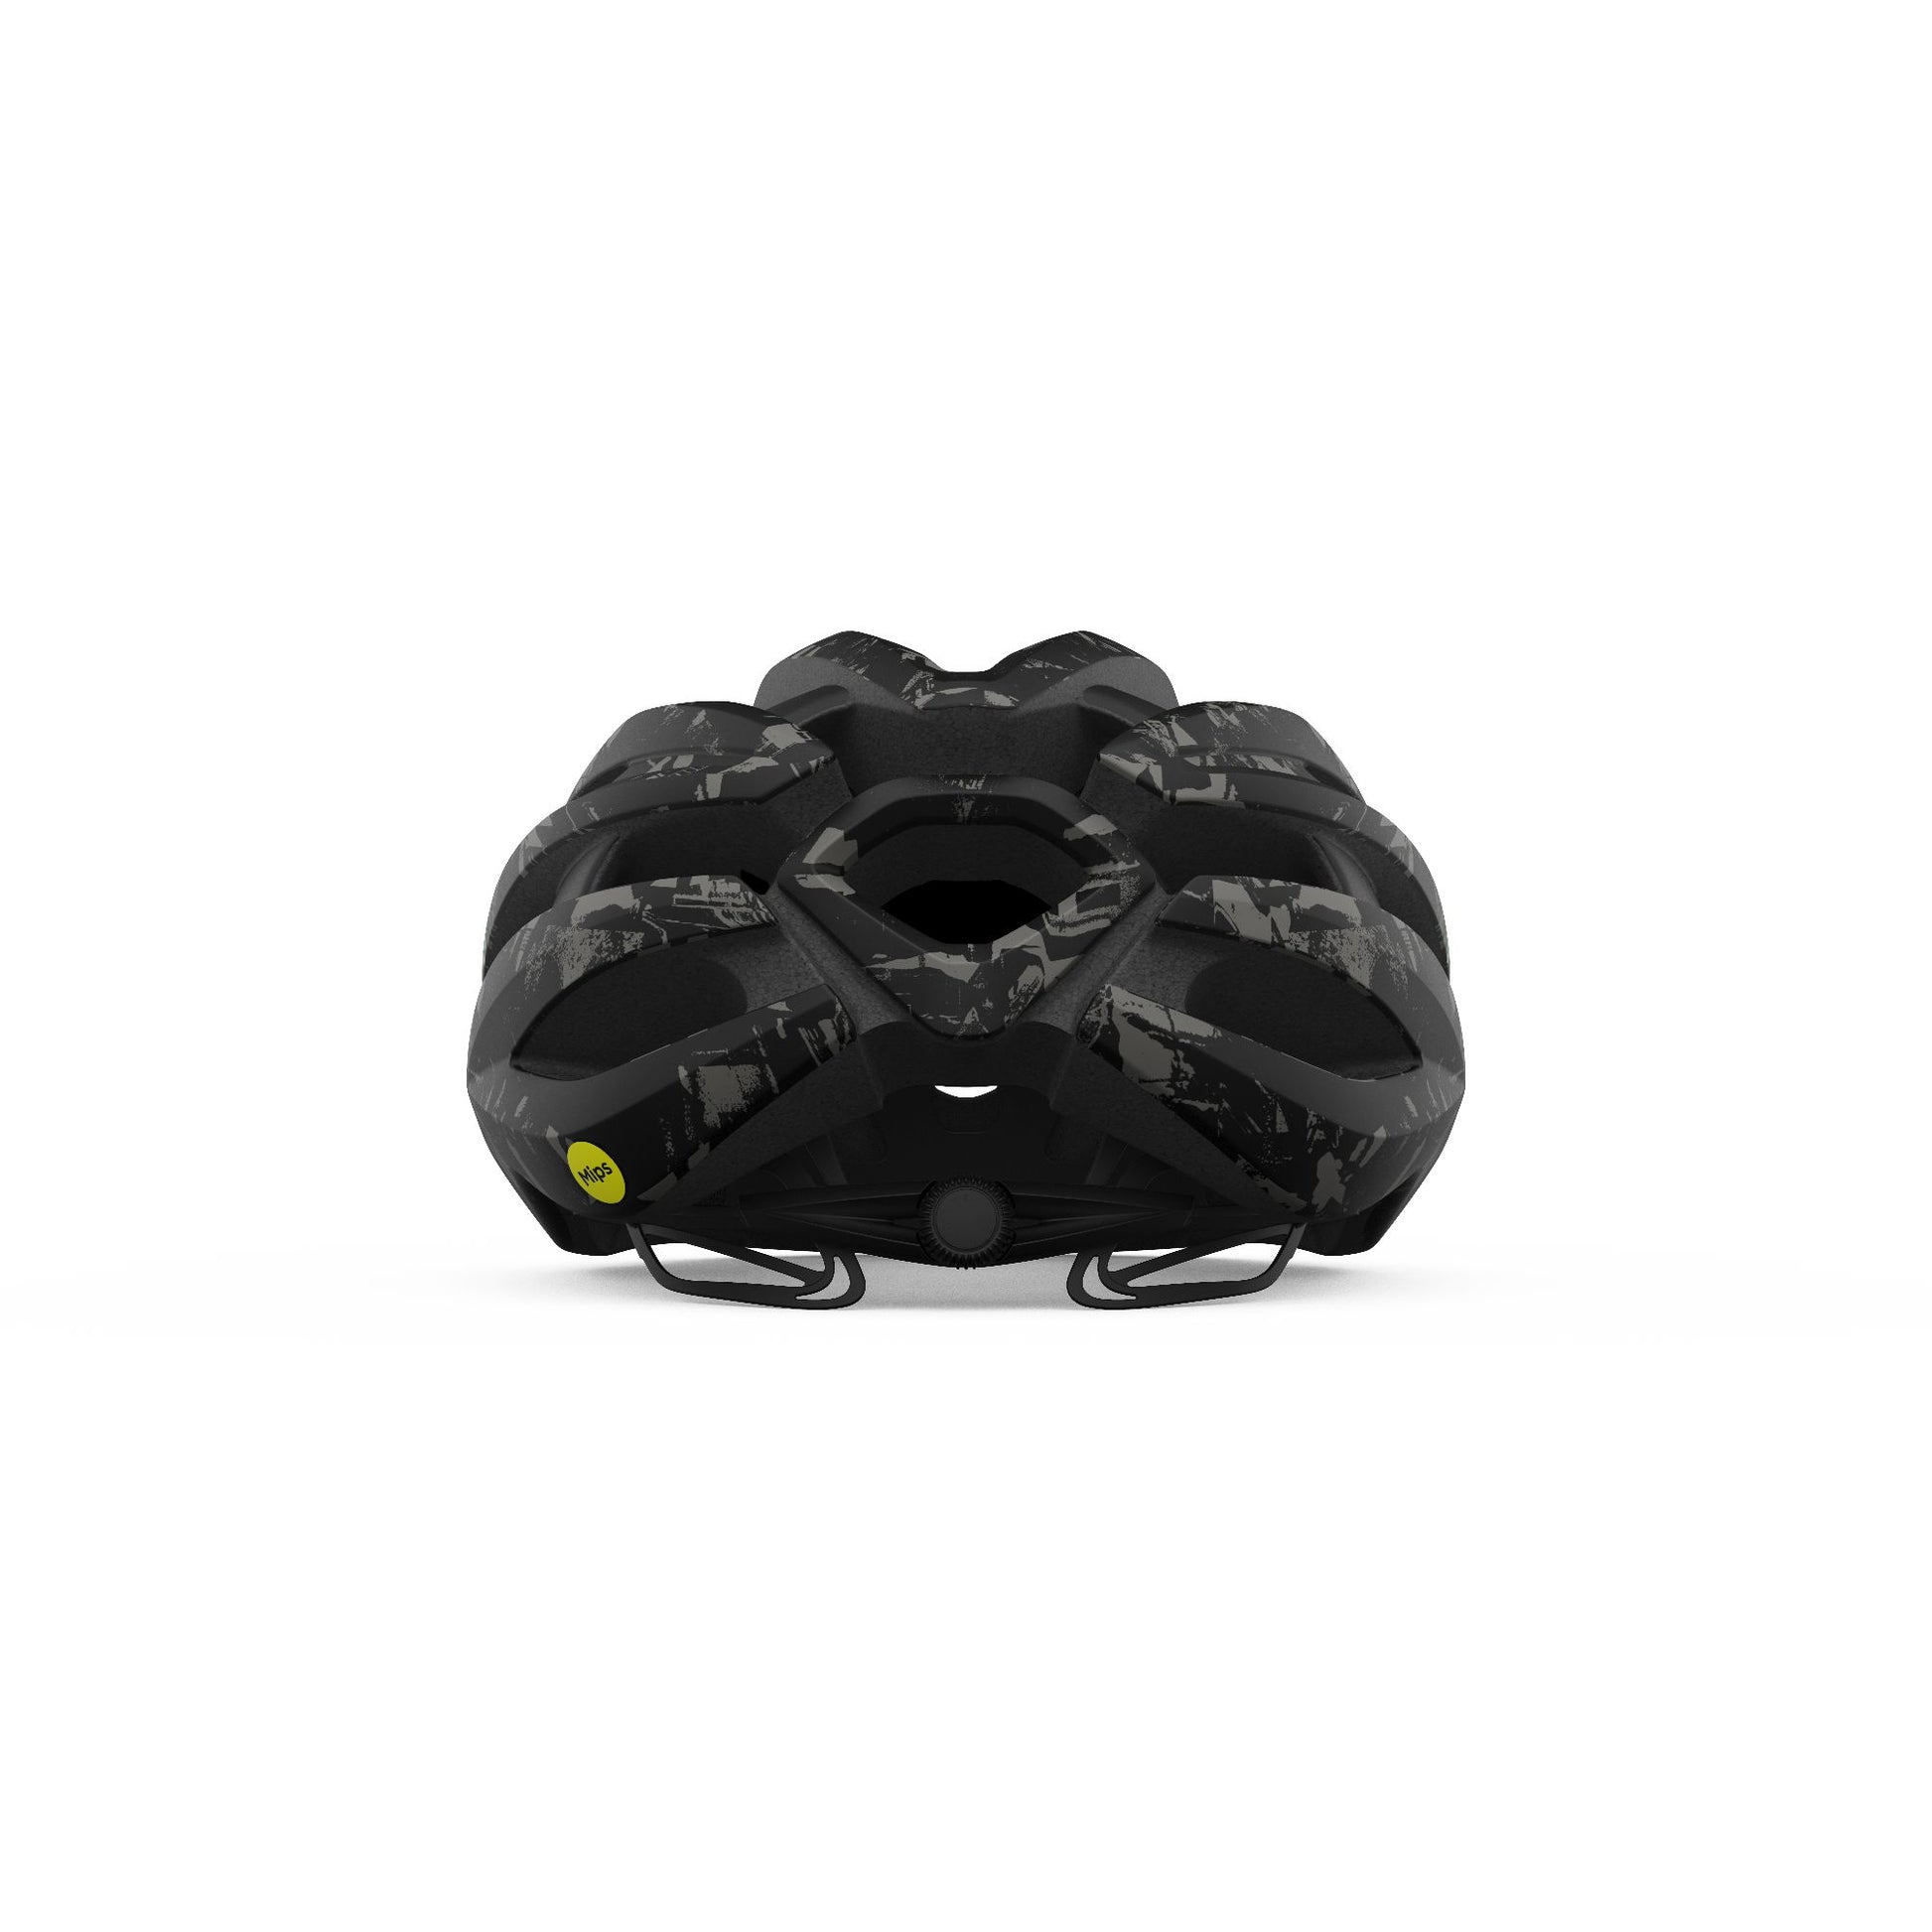 Giro Synthe II MIPS Helmet Matte Black Underground Bike Helmets